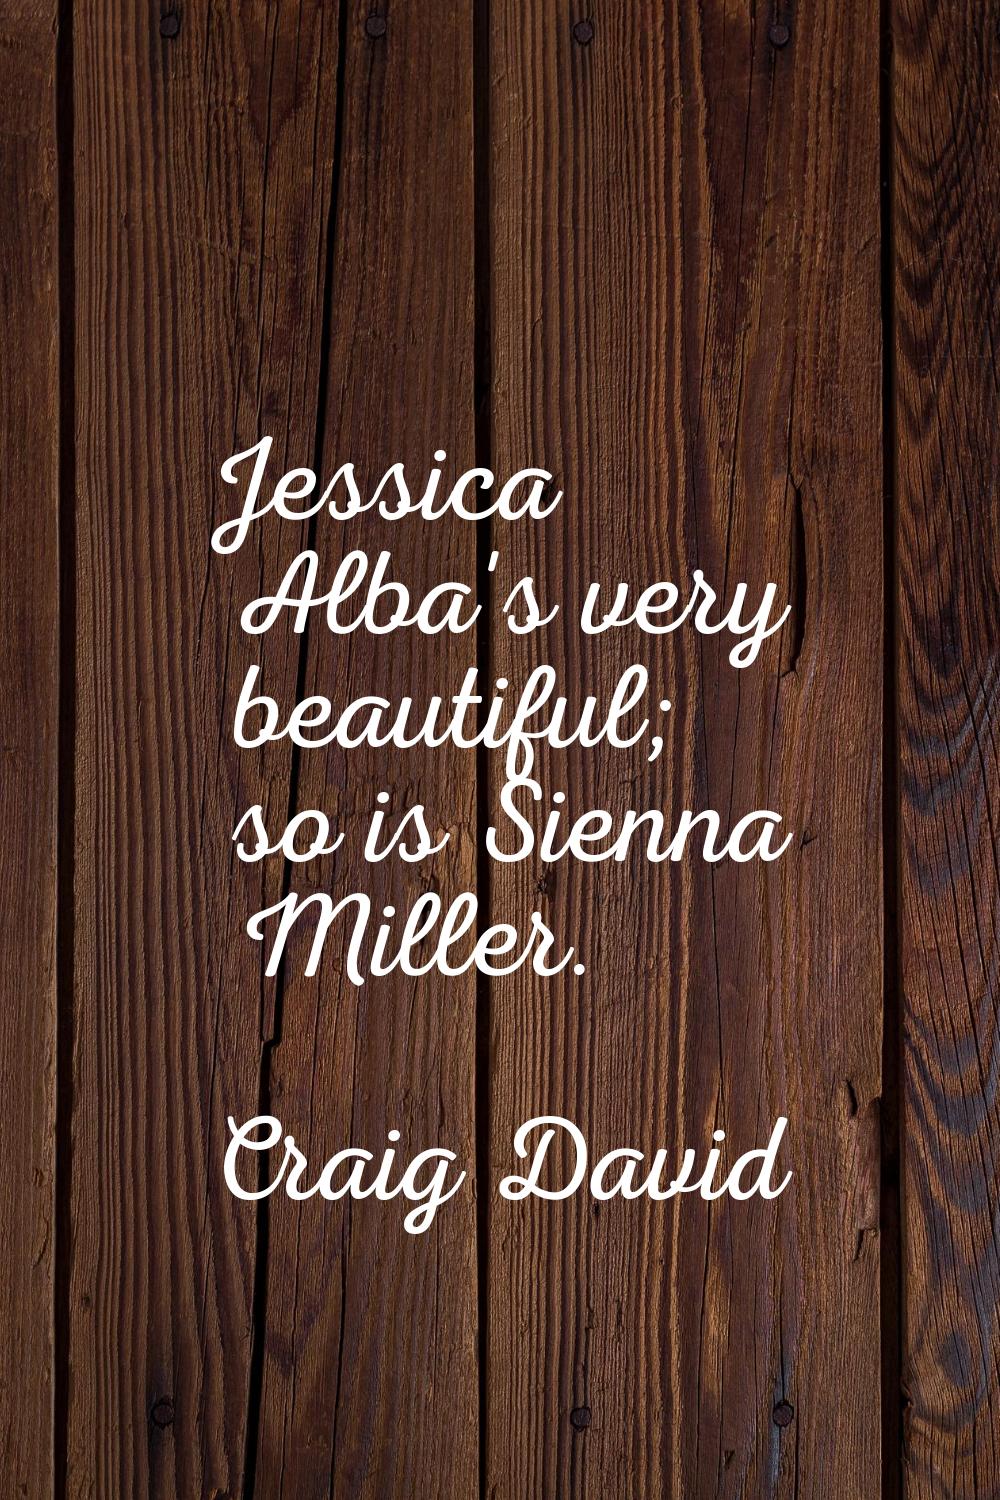 Jessica Alba's very beautiful; so is Sienna Miller.